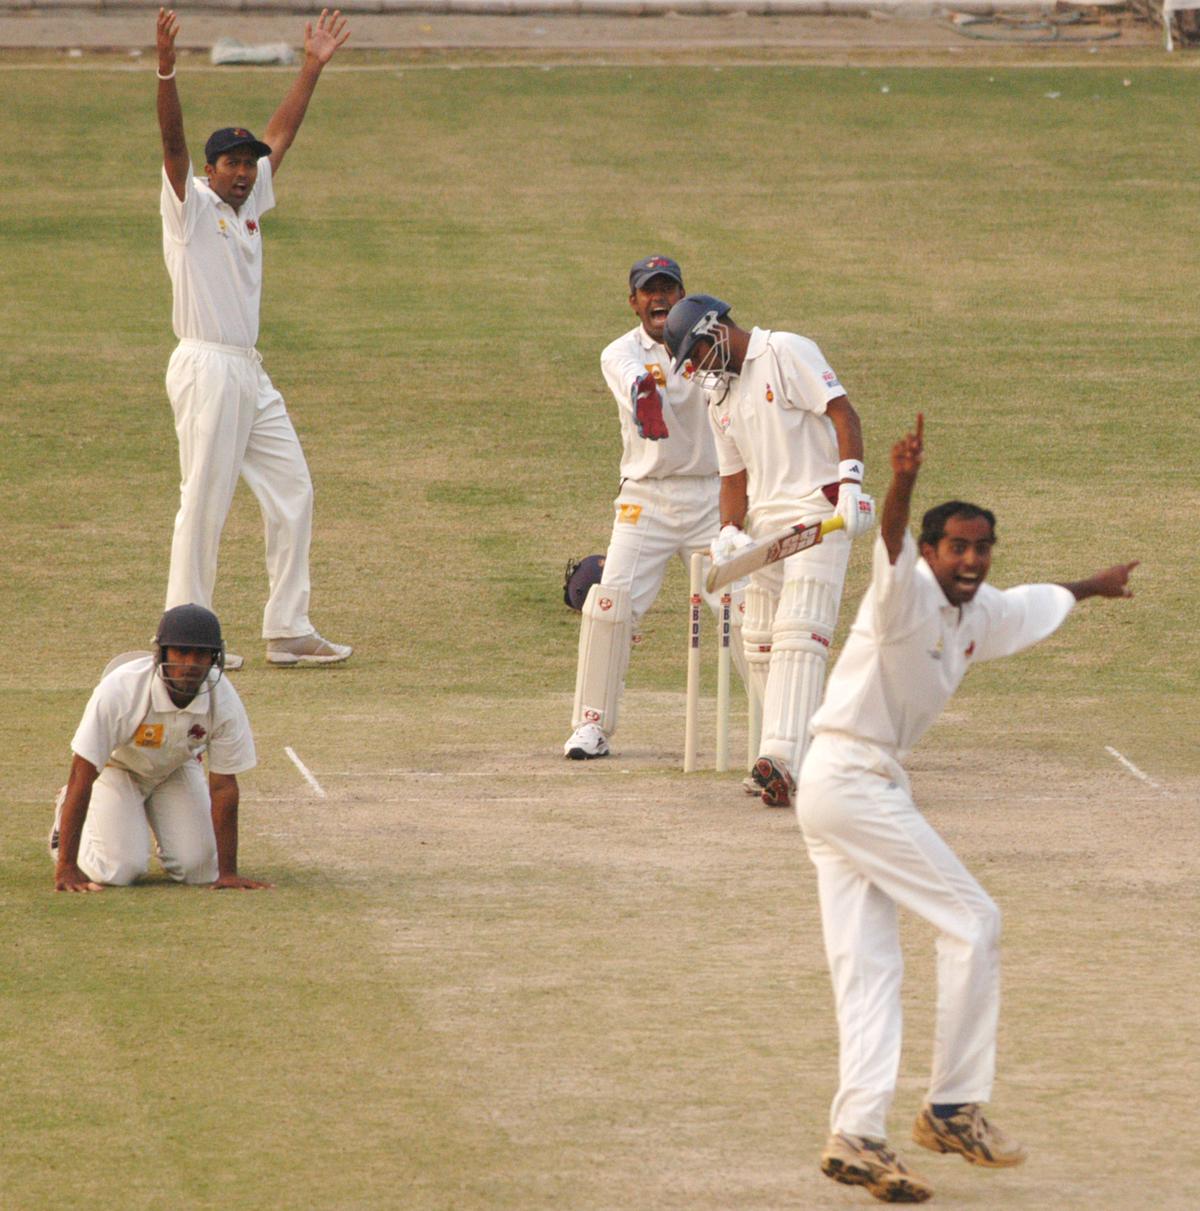 Mumbai bowler Nilesh Kulkarni appeals unsuccessfully for an lbw against Delhi batsman Varun Kumar during the Ranji Trophy Elite Group cricket match at the Ferozeshah Kotla in New Delhi on November 24, 2005. 
Photo: V.V. Krishnan